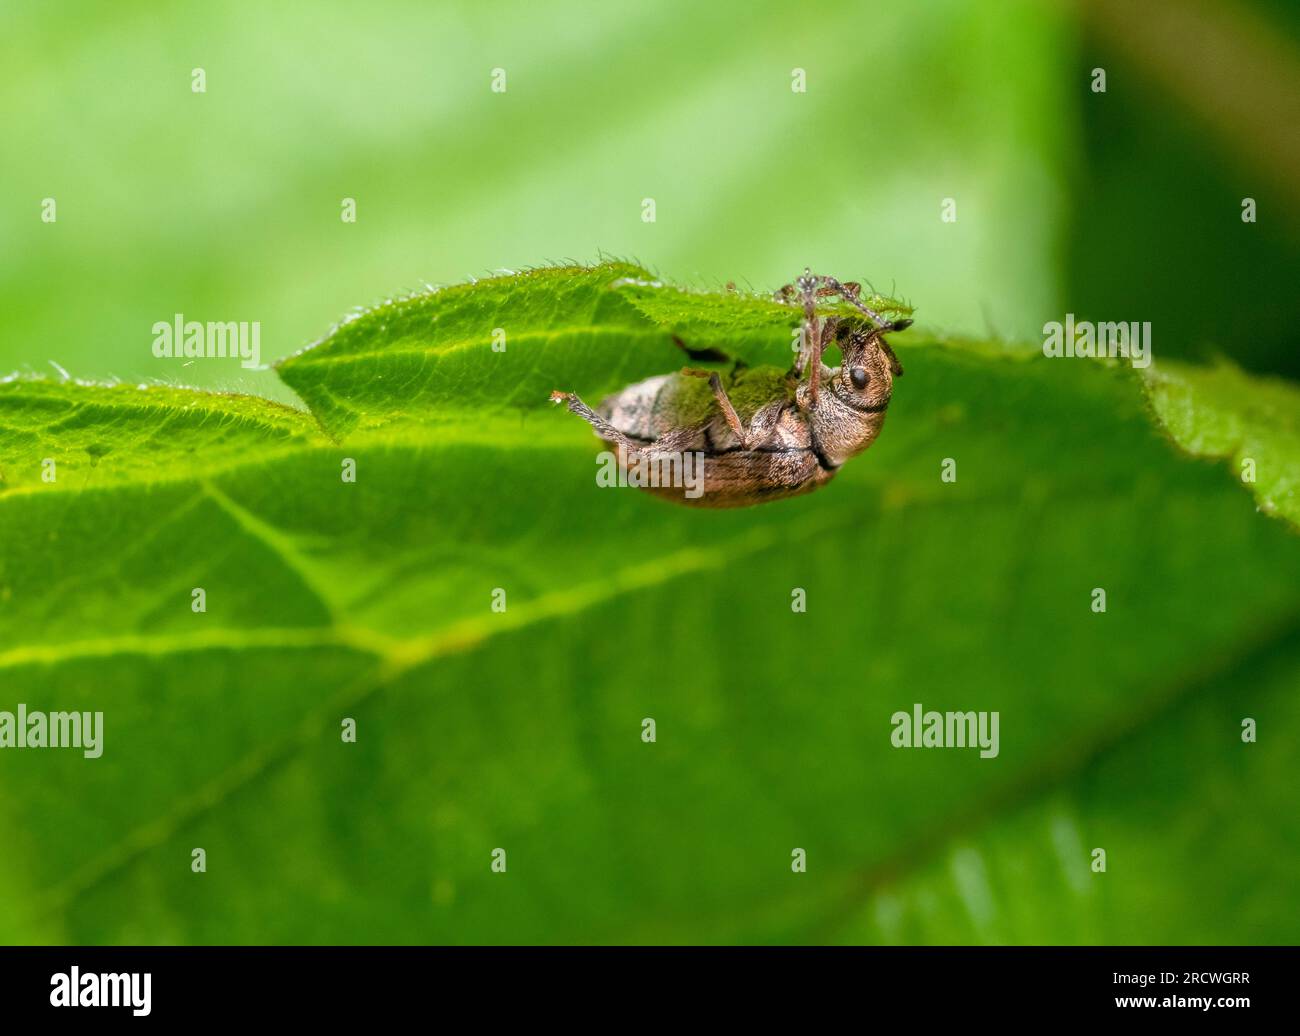 Common leaf weevil on stinging nettle leaf Stock Photo - Alamy